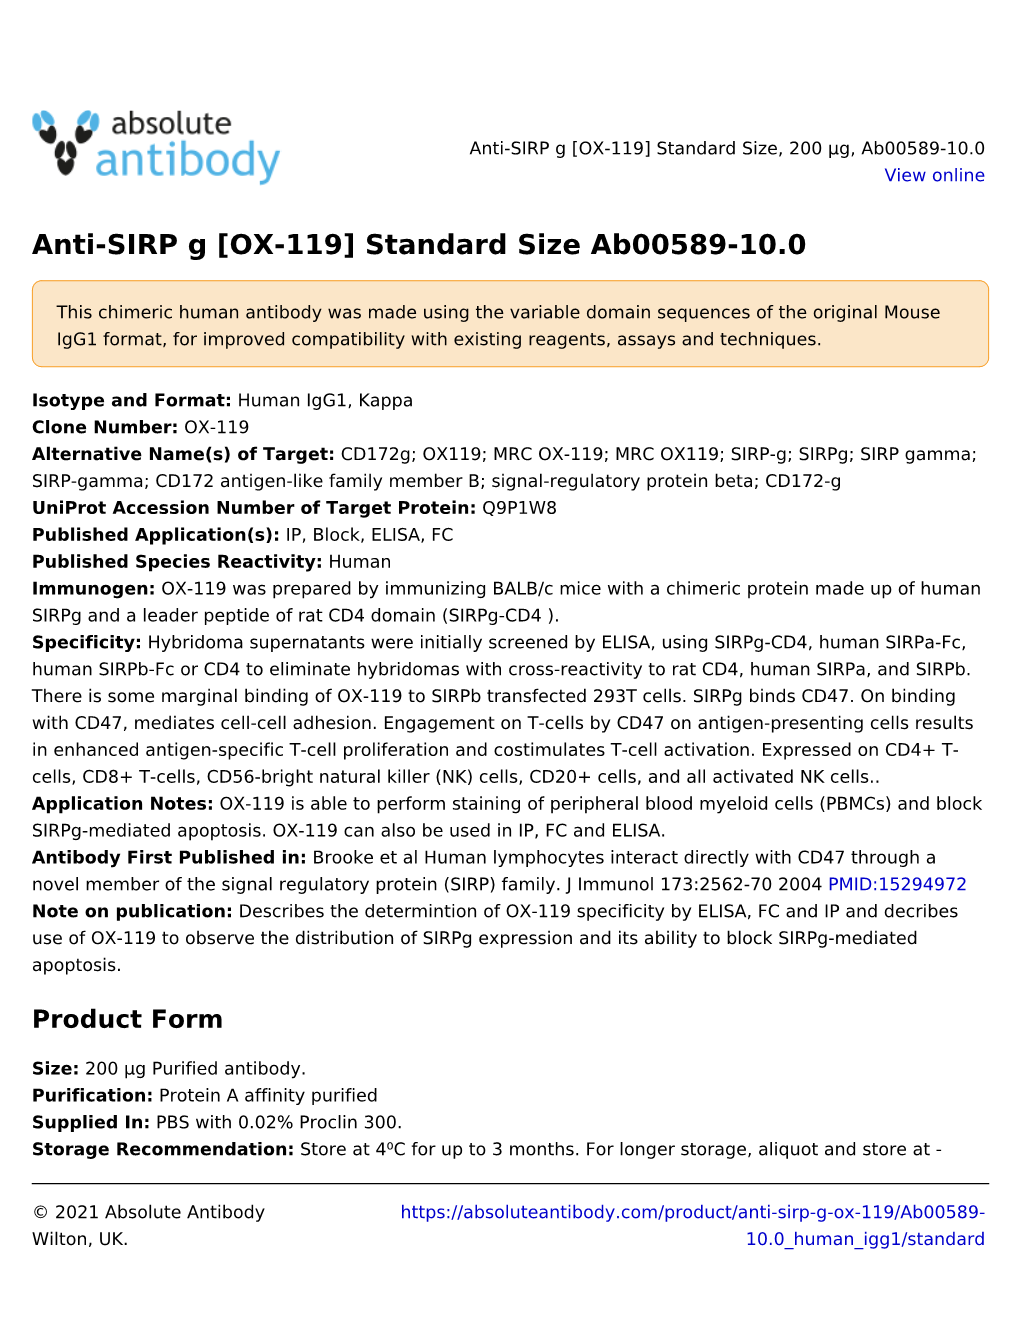 Anti-SIRP G [OX-119] Standard Size Ab00589-10.0